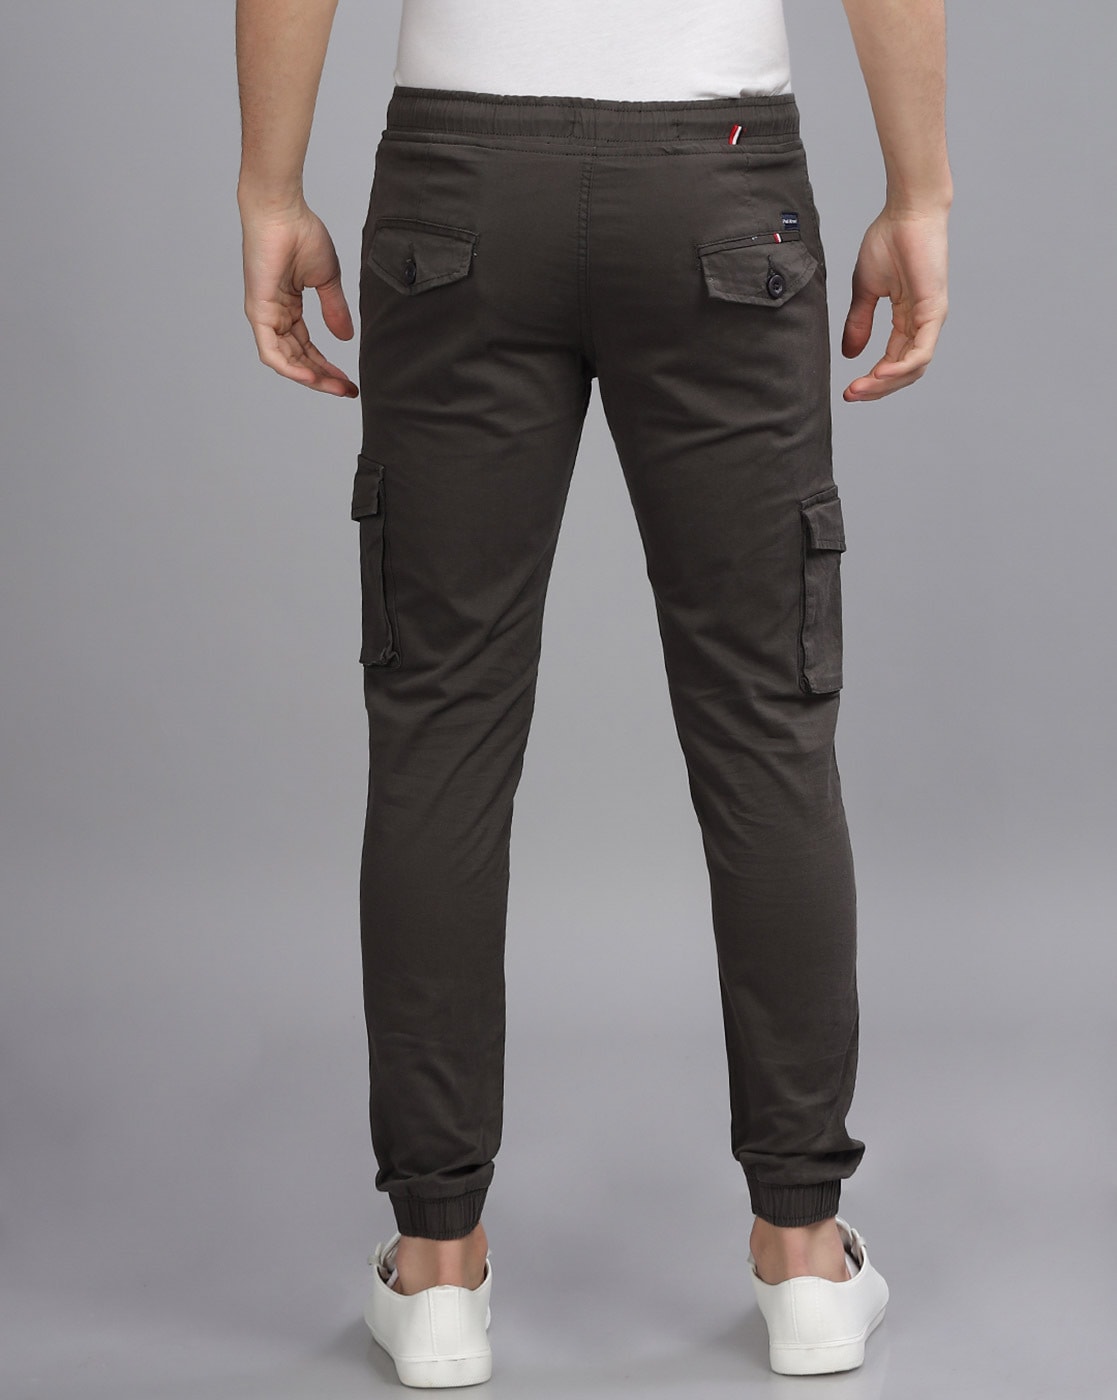 kpoplk Mens Cargo Pants,Men's Drawstring Elastic Waist Cargo Pants Flap  Pocket Street Pants(Khaki,M) - Walmart.com